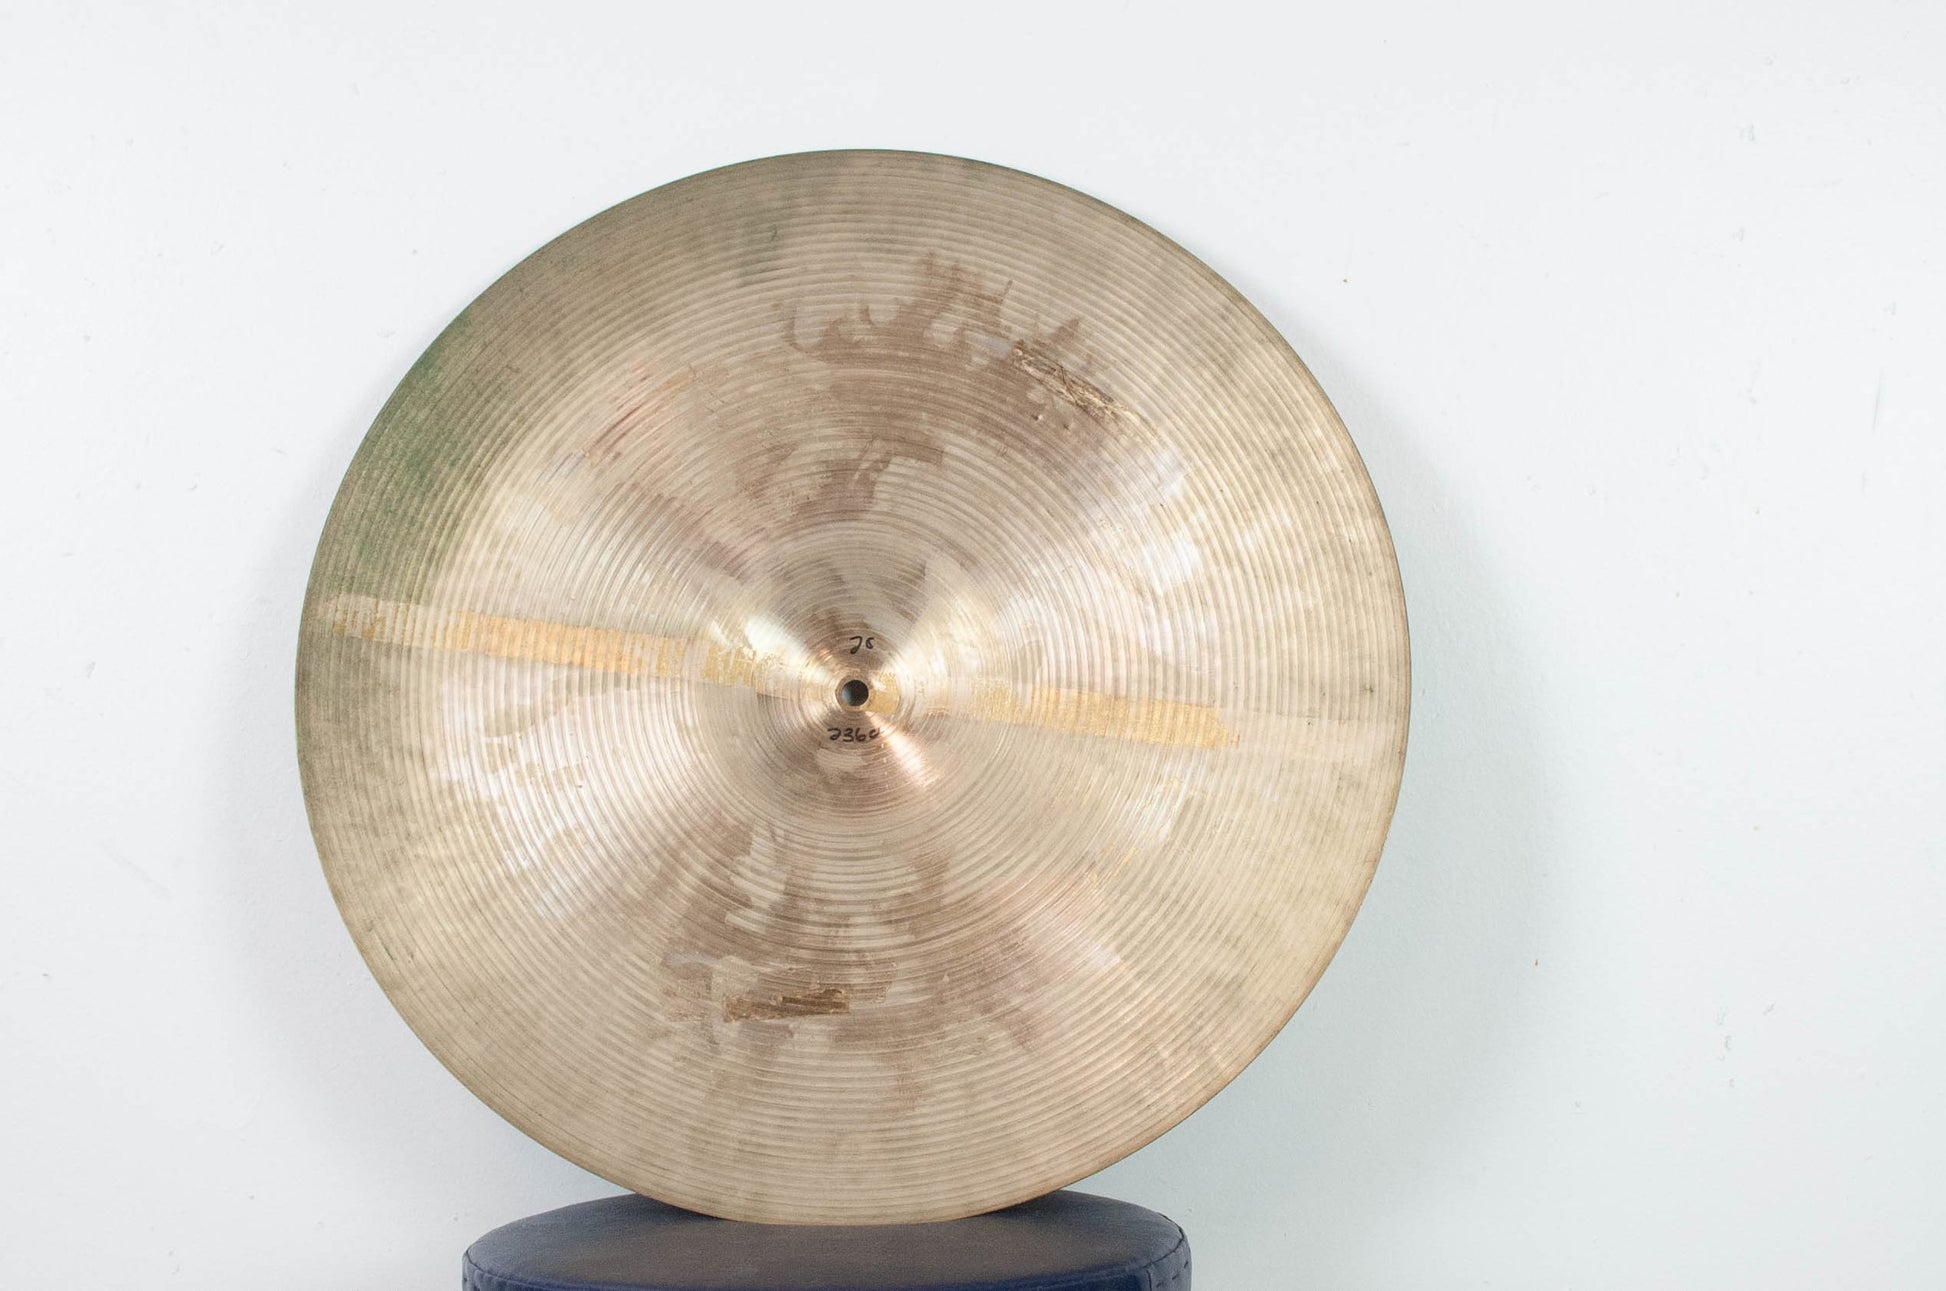 1960s Zildjian A 20" Medium Ride Cymbal 2360g